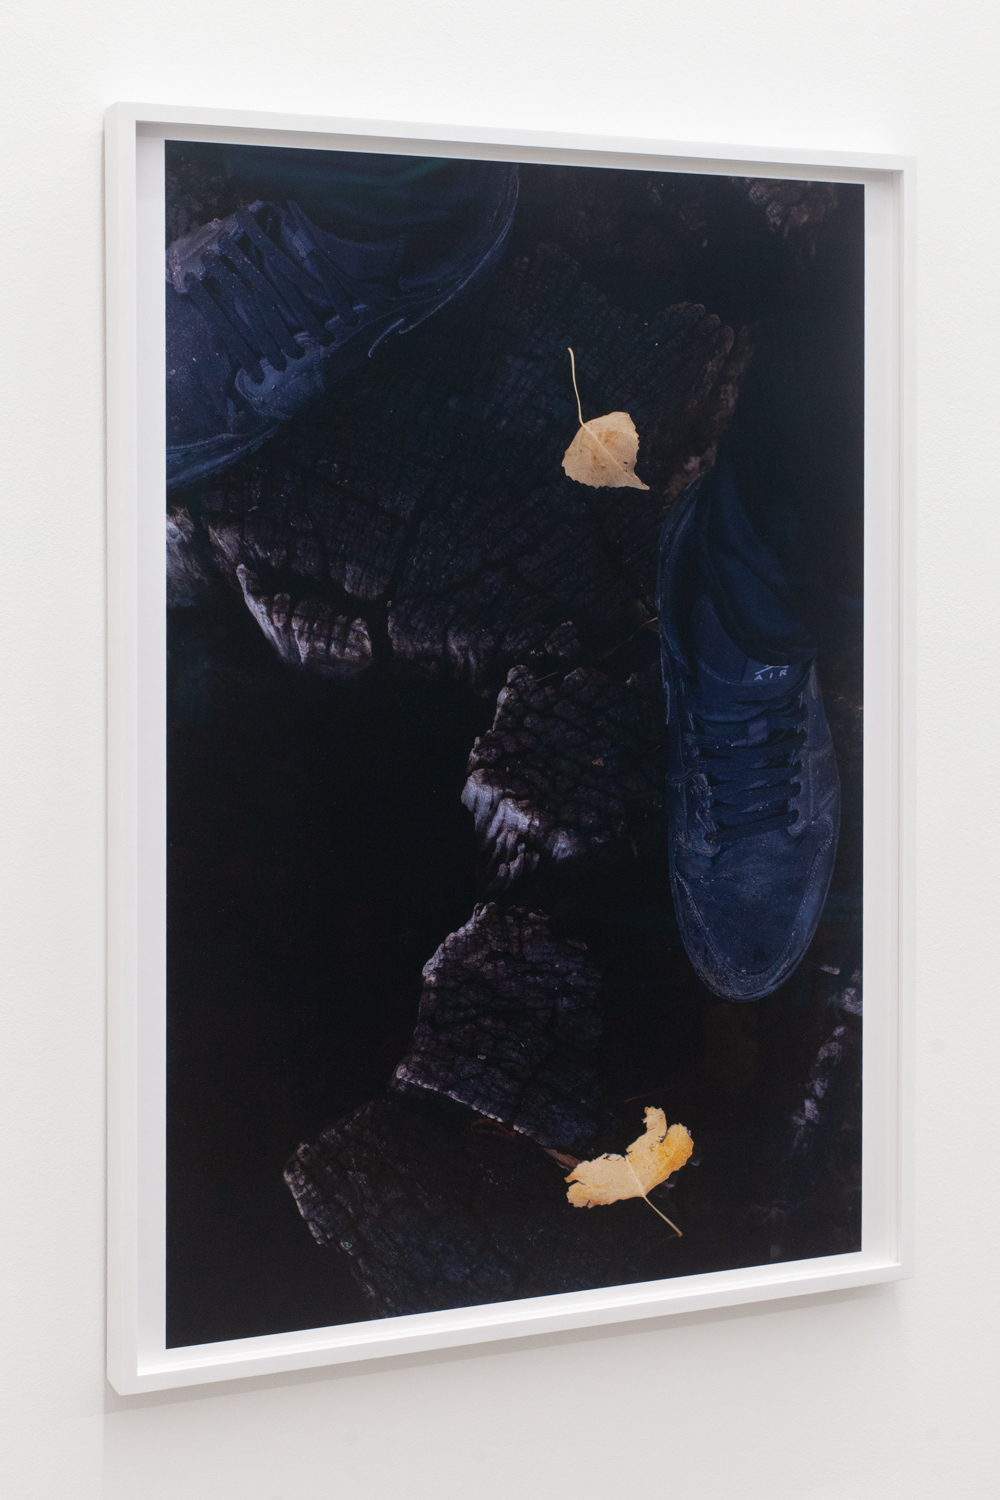 Paul Hutchinson, Air, 2020, Framed C-Print, 70 x 50 cm, Edition of 5 + 2 AP